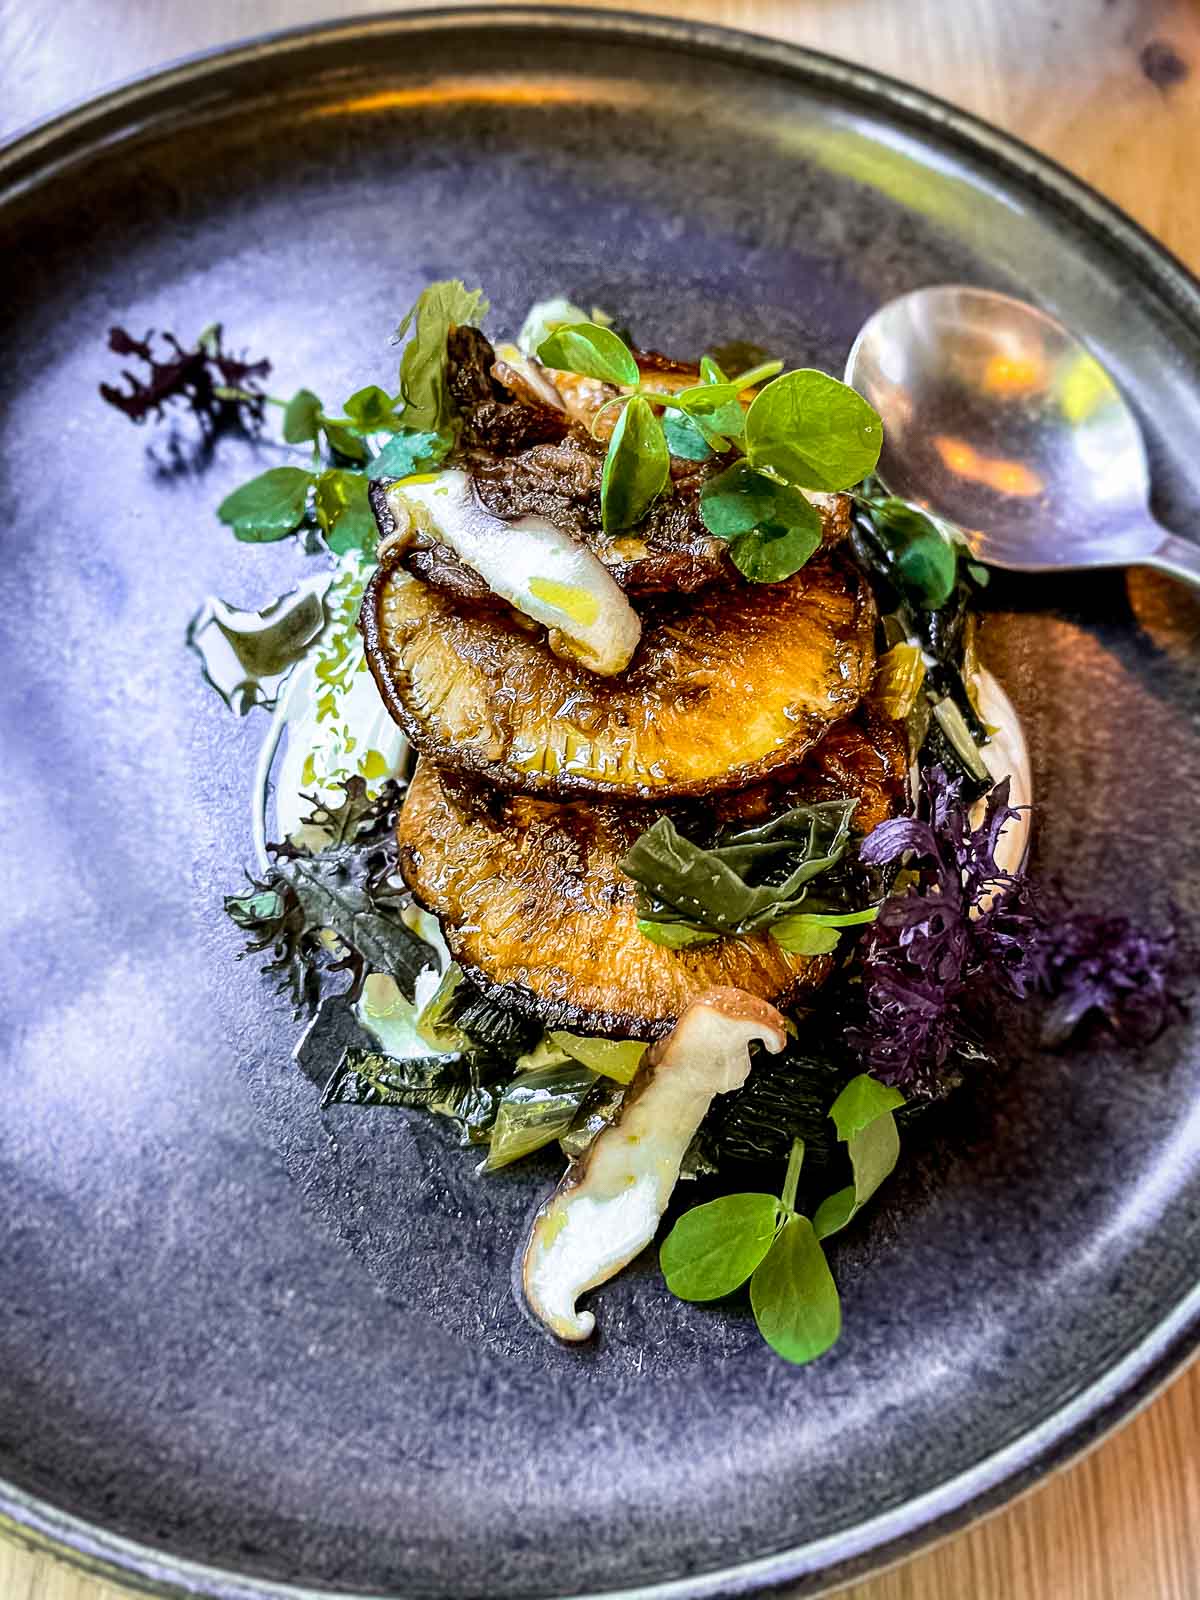 25 Best Vegan Restaurants in Vancouver BC for 2023 - shiitake mushroom appetizer from The Acorn